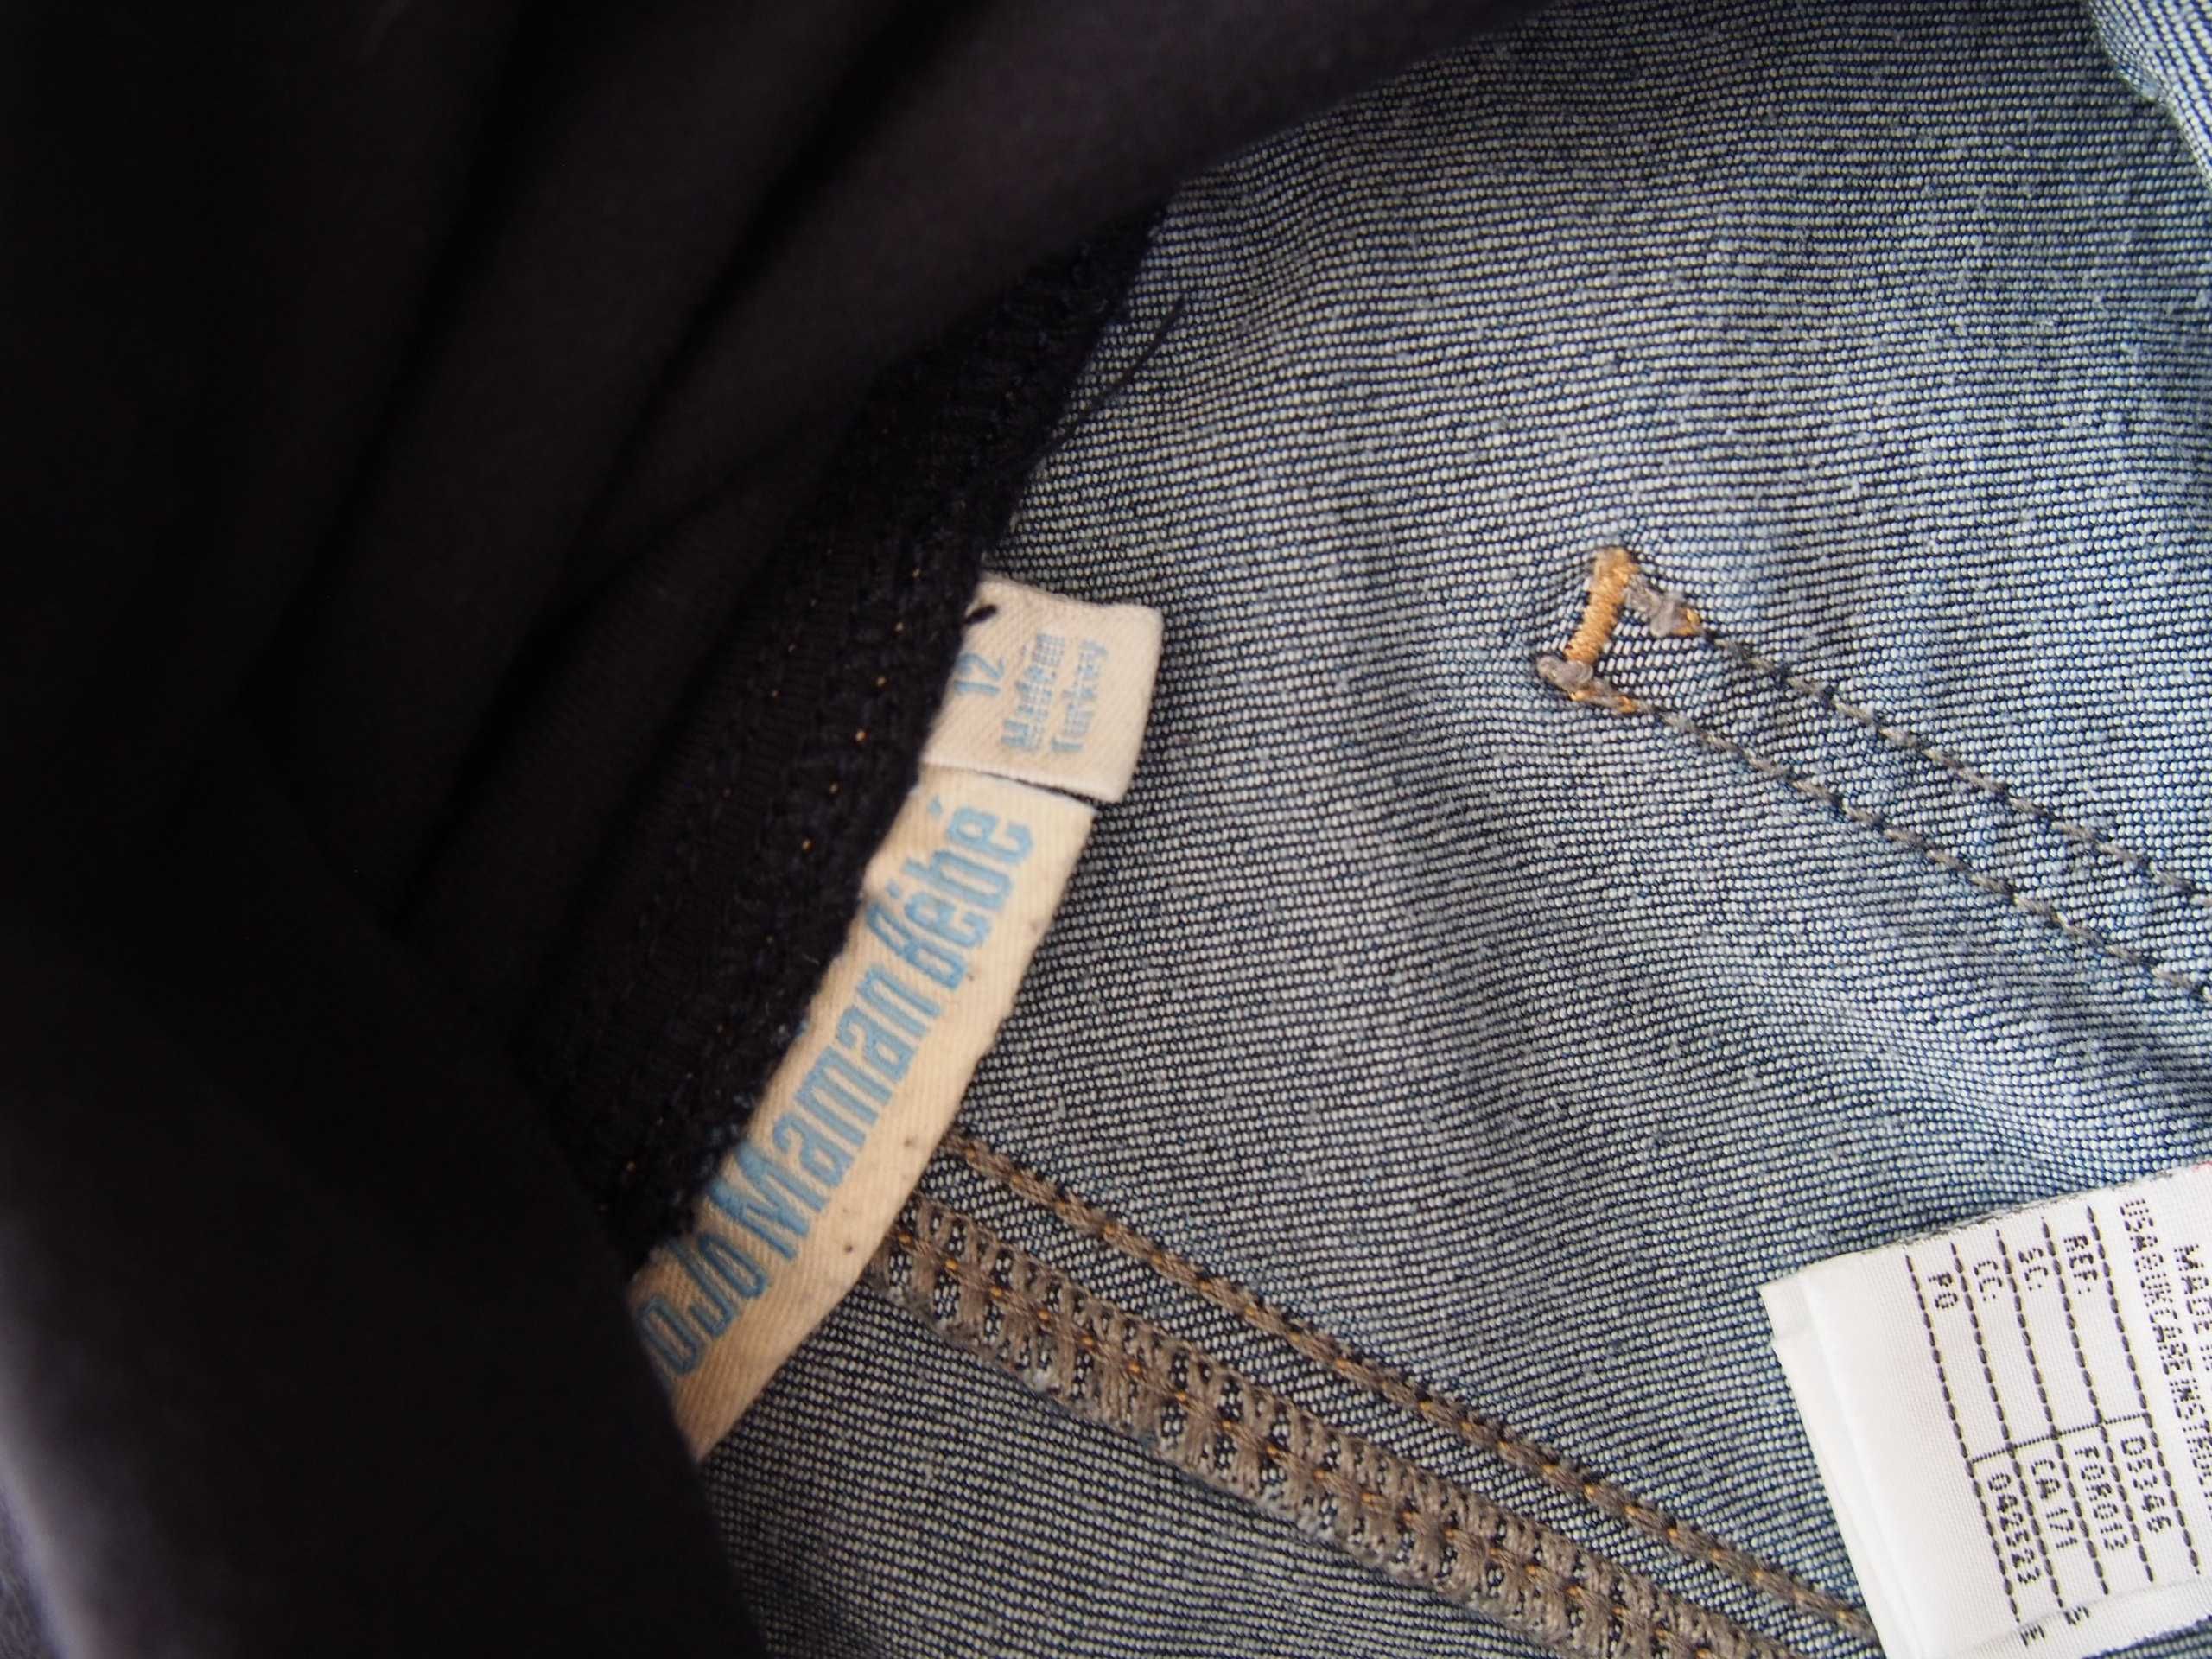 Spodnie ciążowe M/L jeans rurki